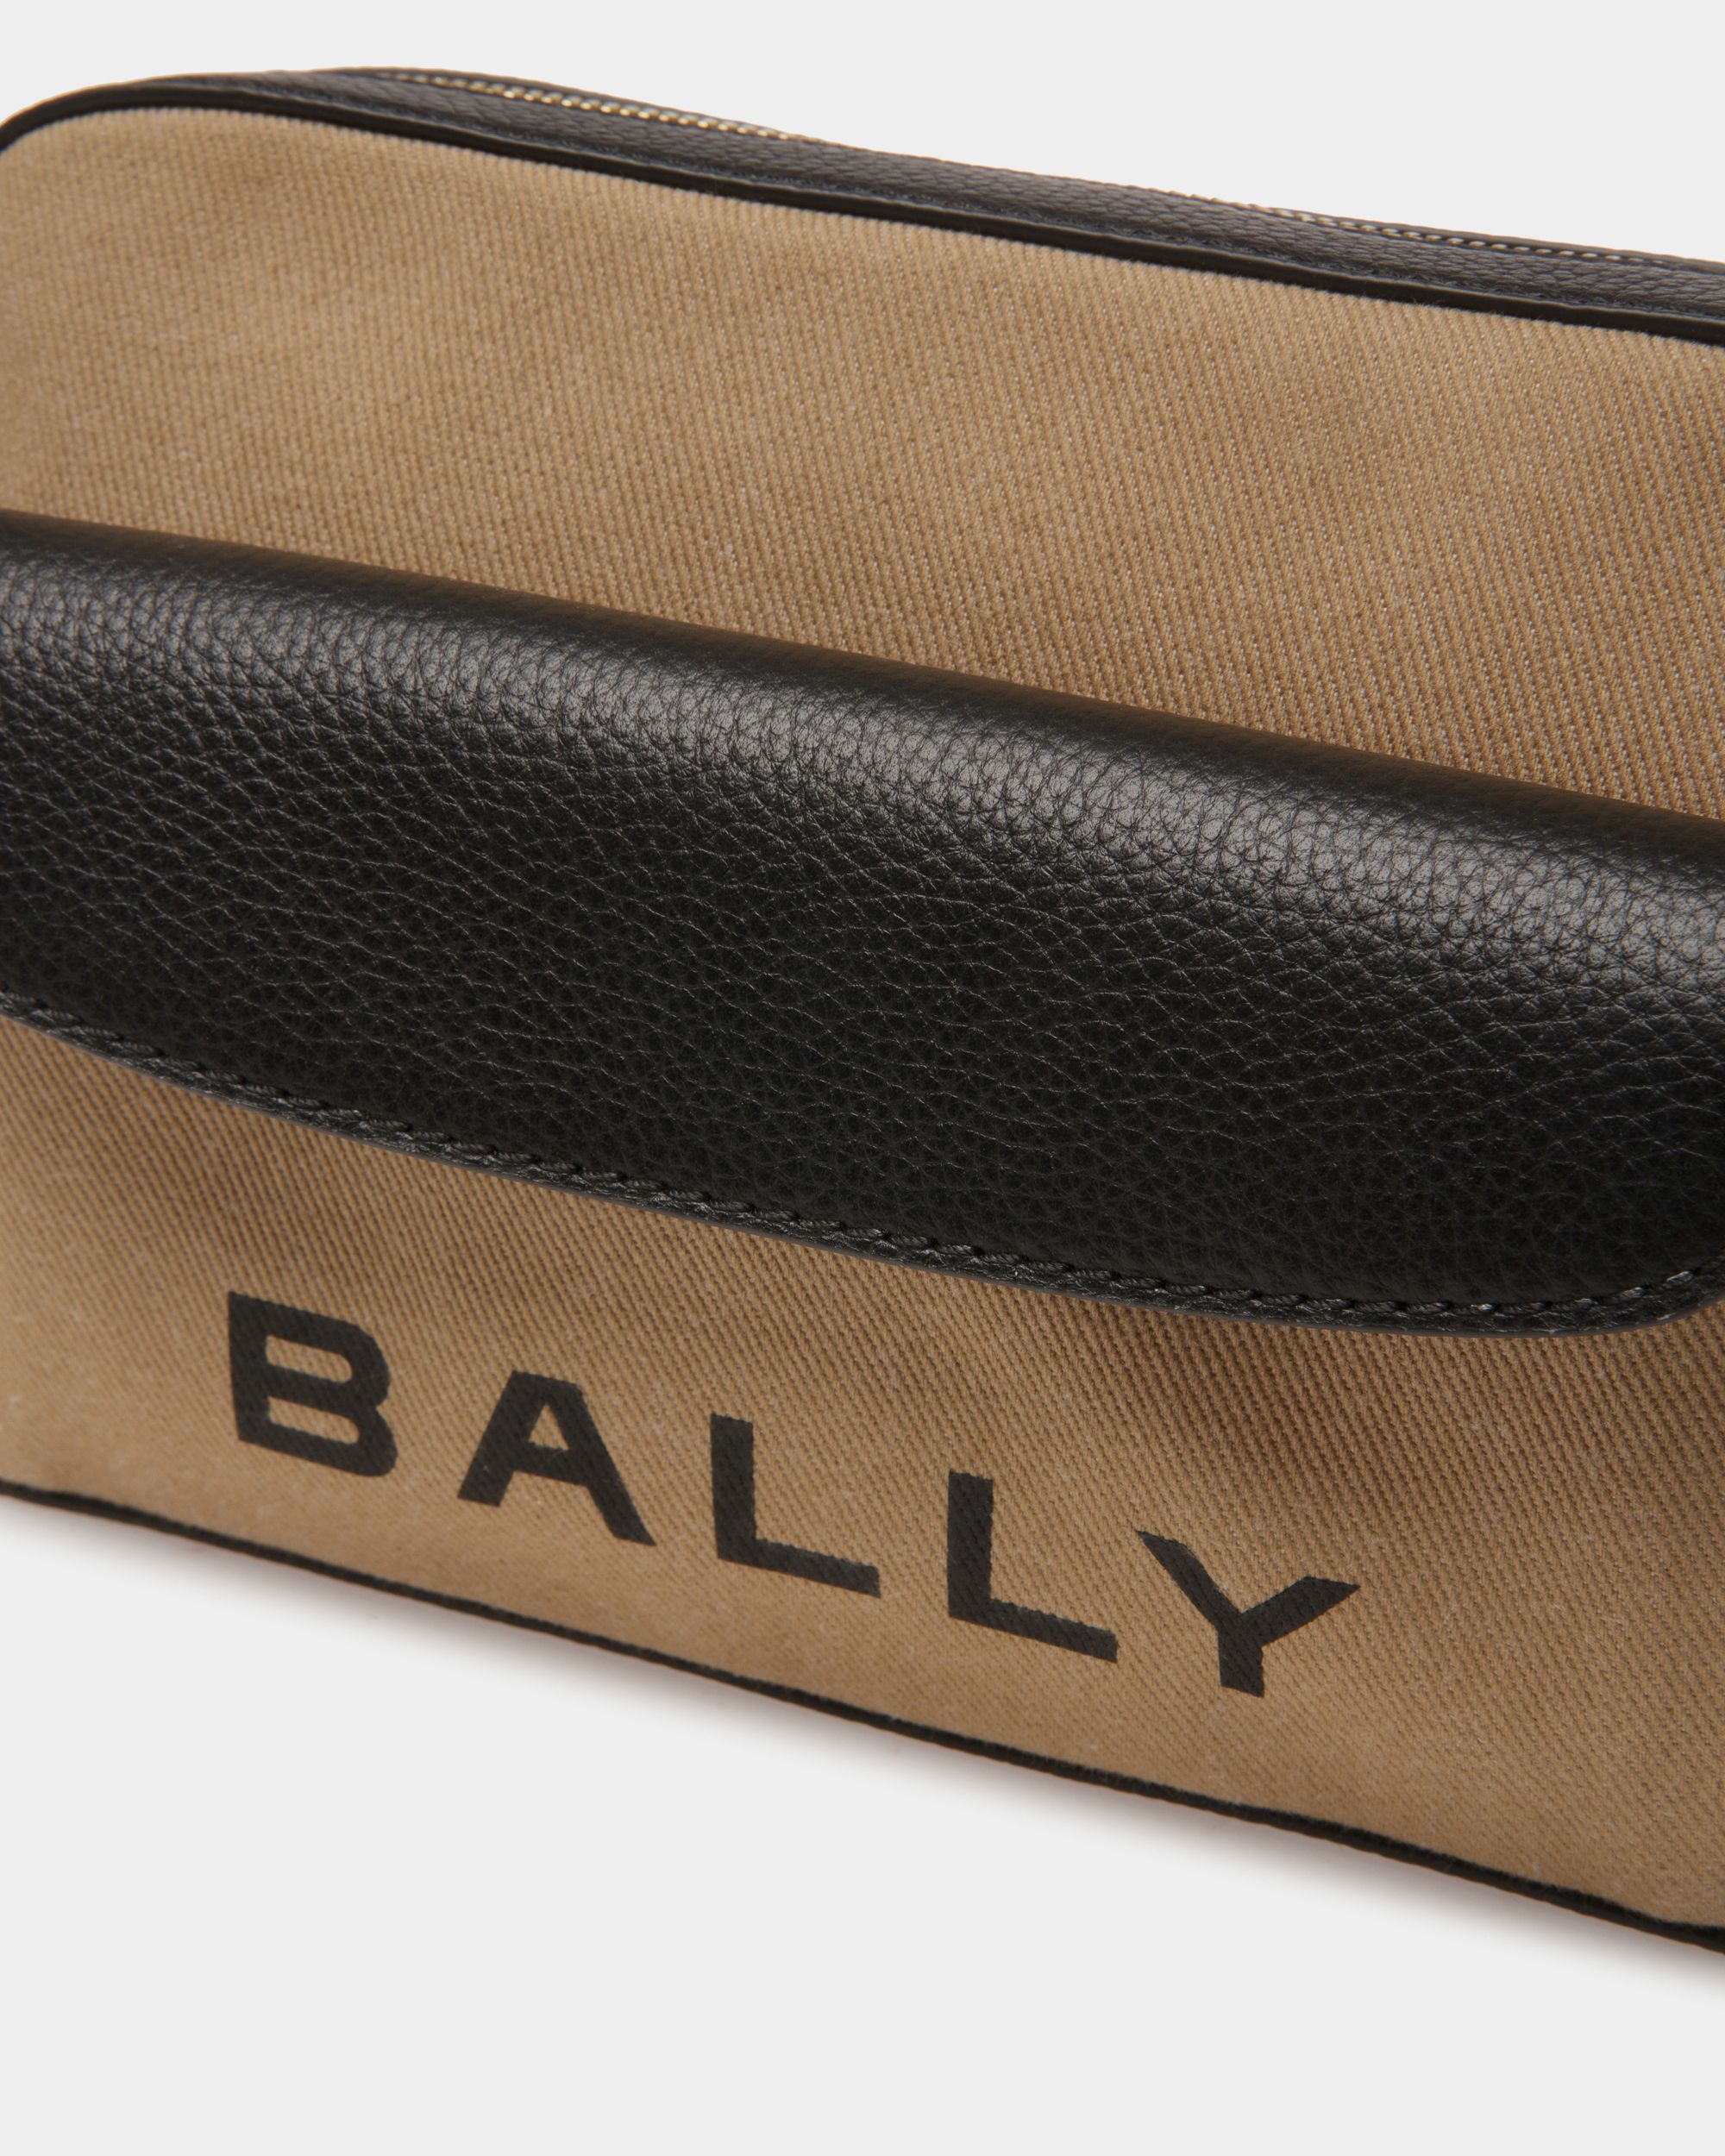 Bar Daniel | Women's Crossbody Bag | Sand And Black Fabric | Bally | Still Life Detail